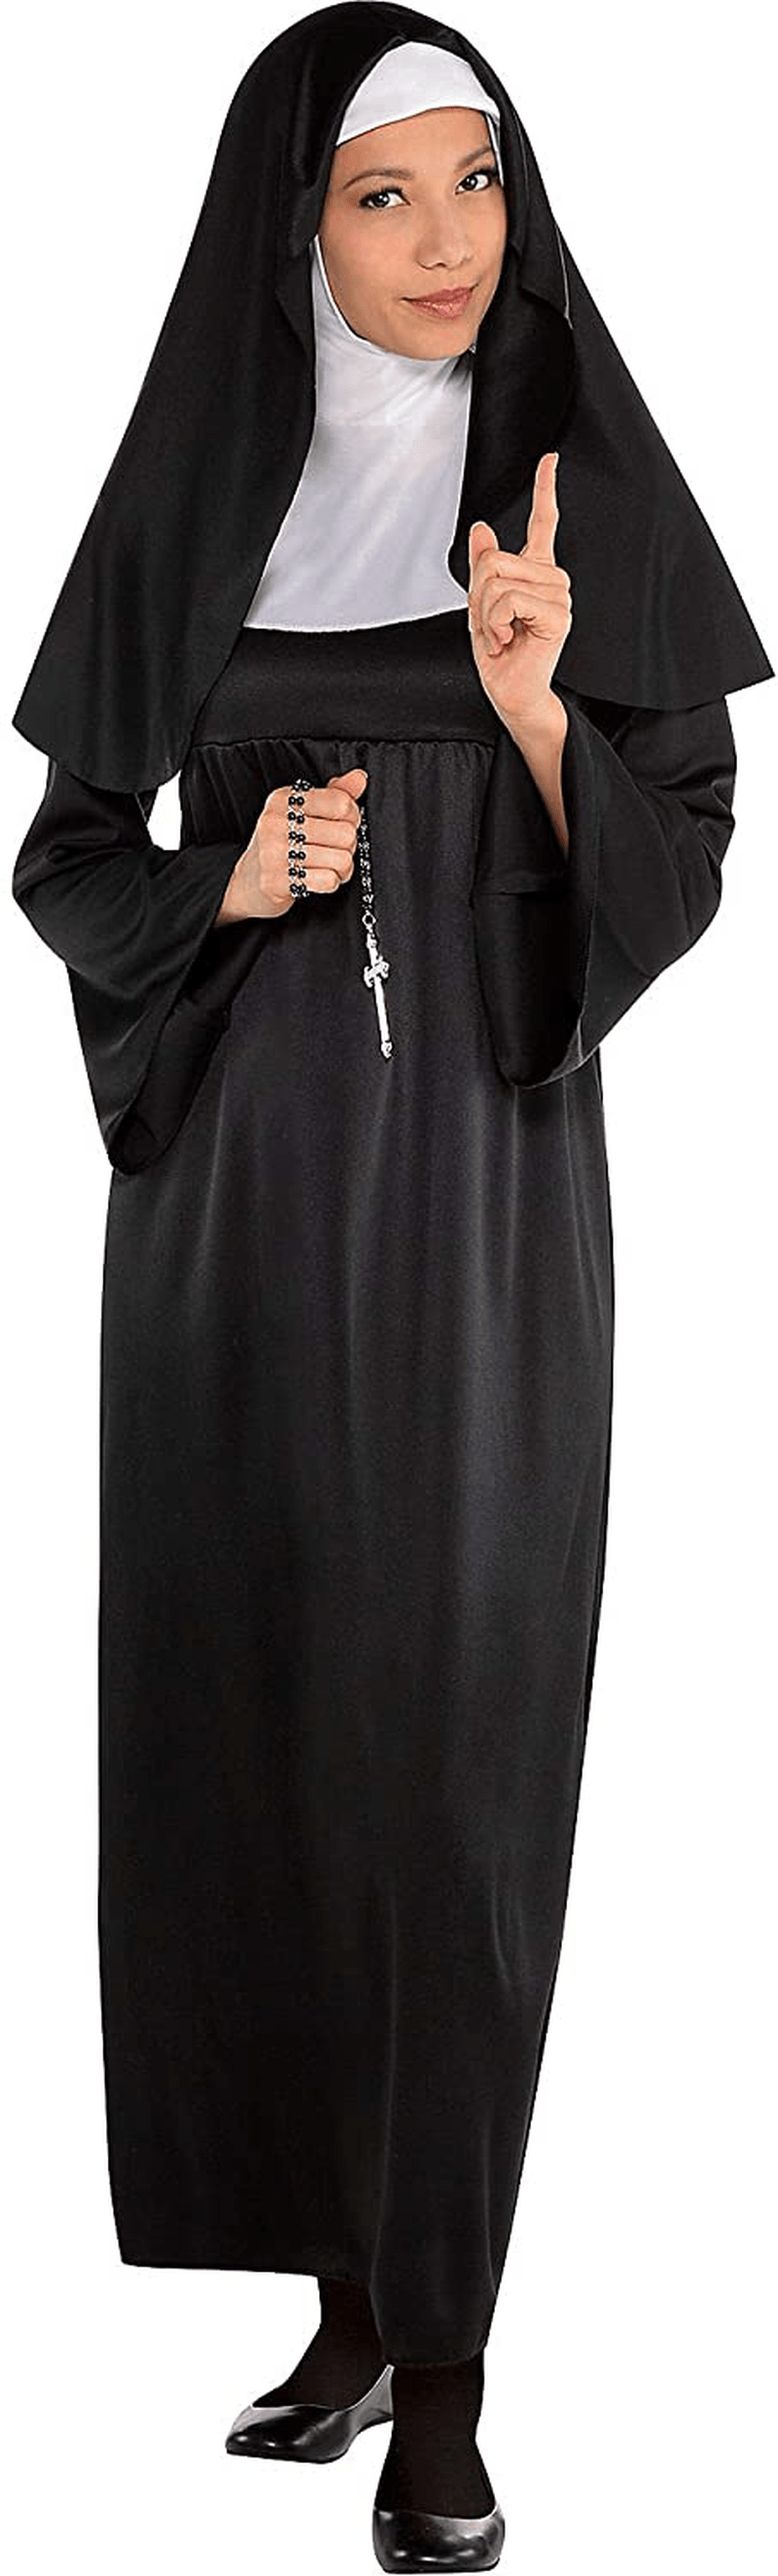 amscan Sister Adult Nun Costume Apparel & Accessories > Costumes & Accessories > Costumes amscan Adult - Plus Size  